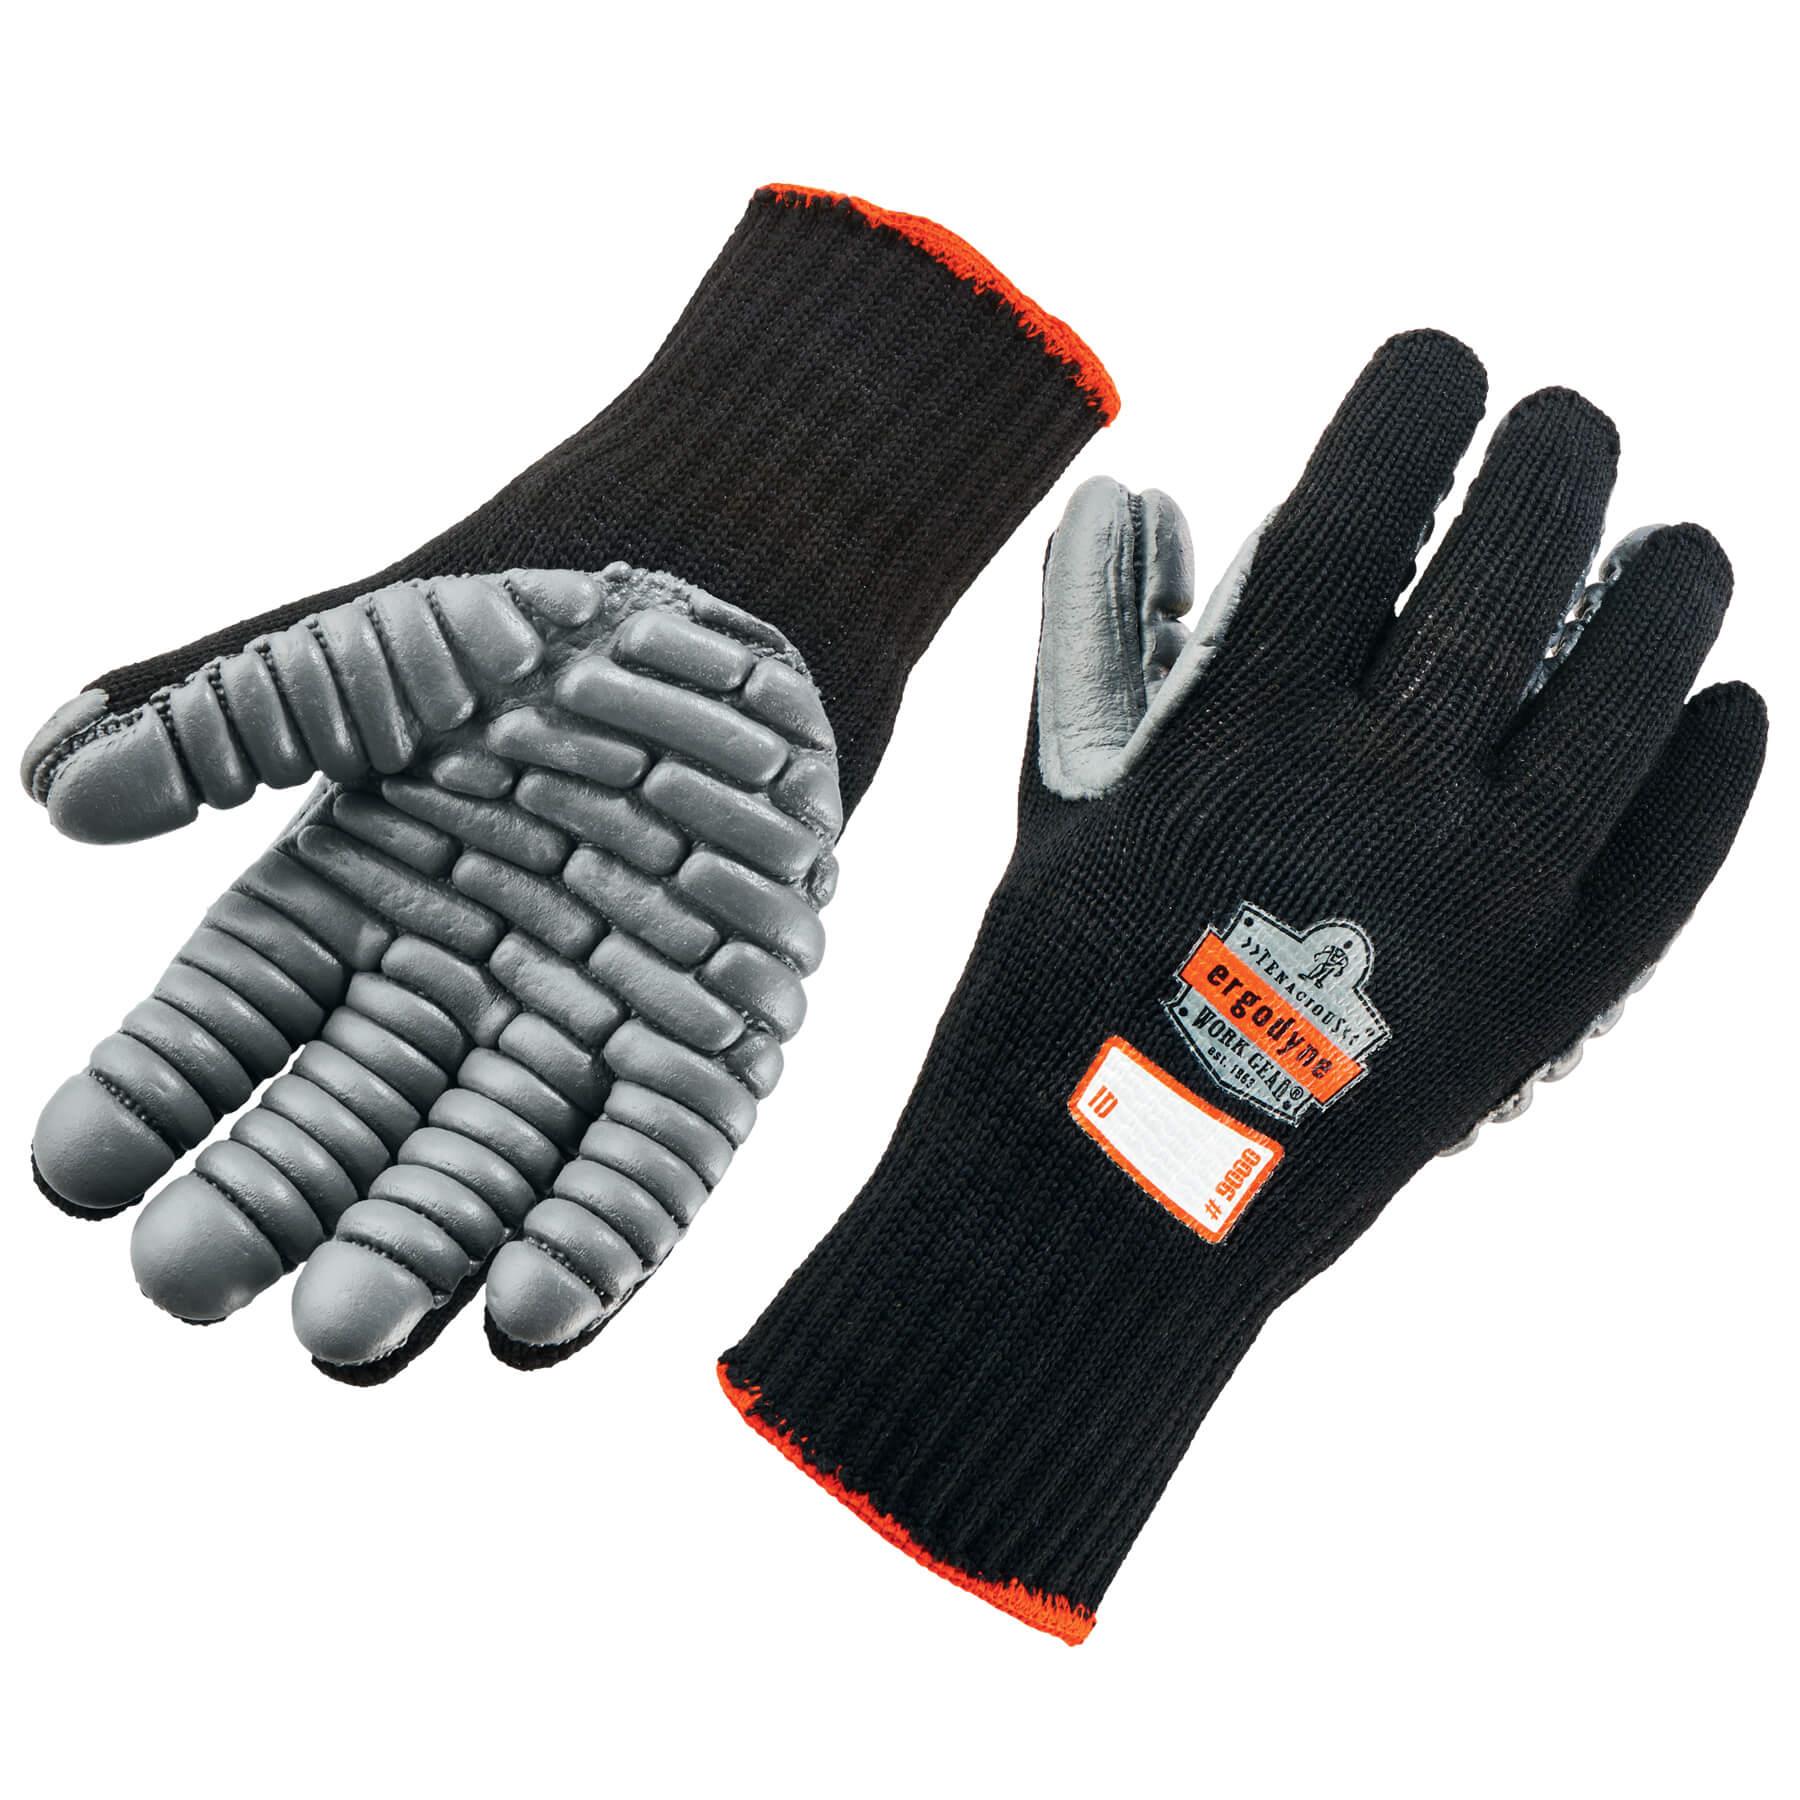 PROFLEX CERTIFIED ANTI-VIBRATION GLOVE - Impact & Anti-Vibe Gloves